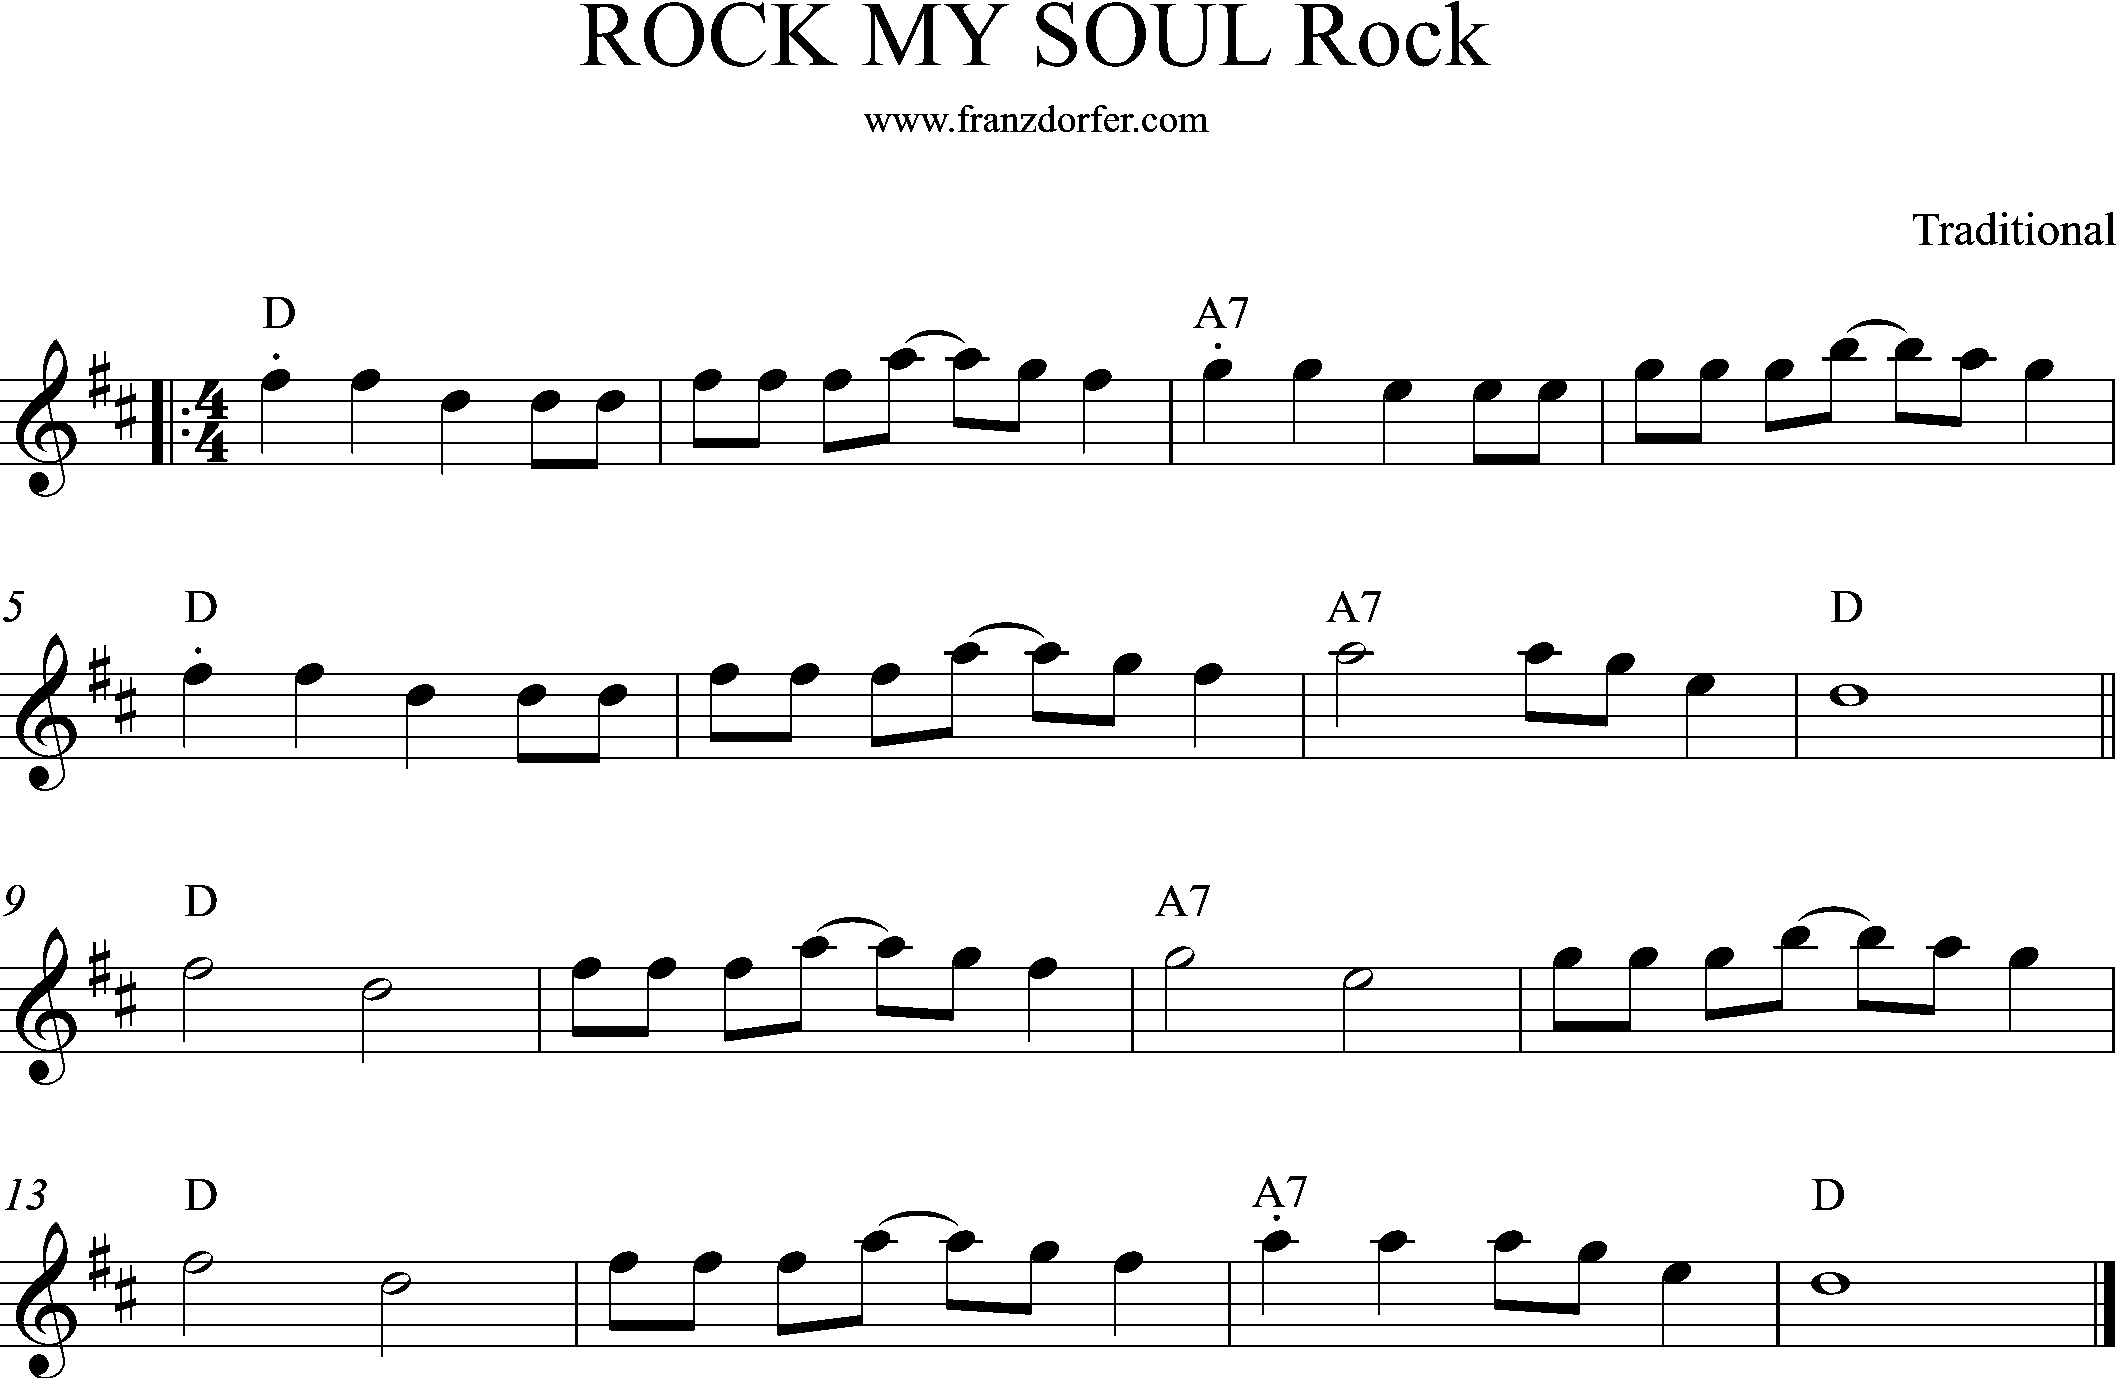 D-Dur hoch Rock my soul